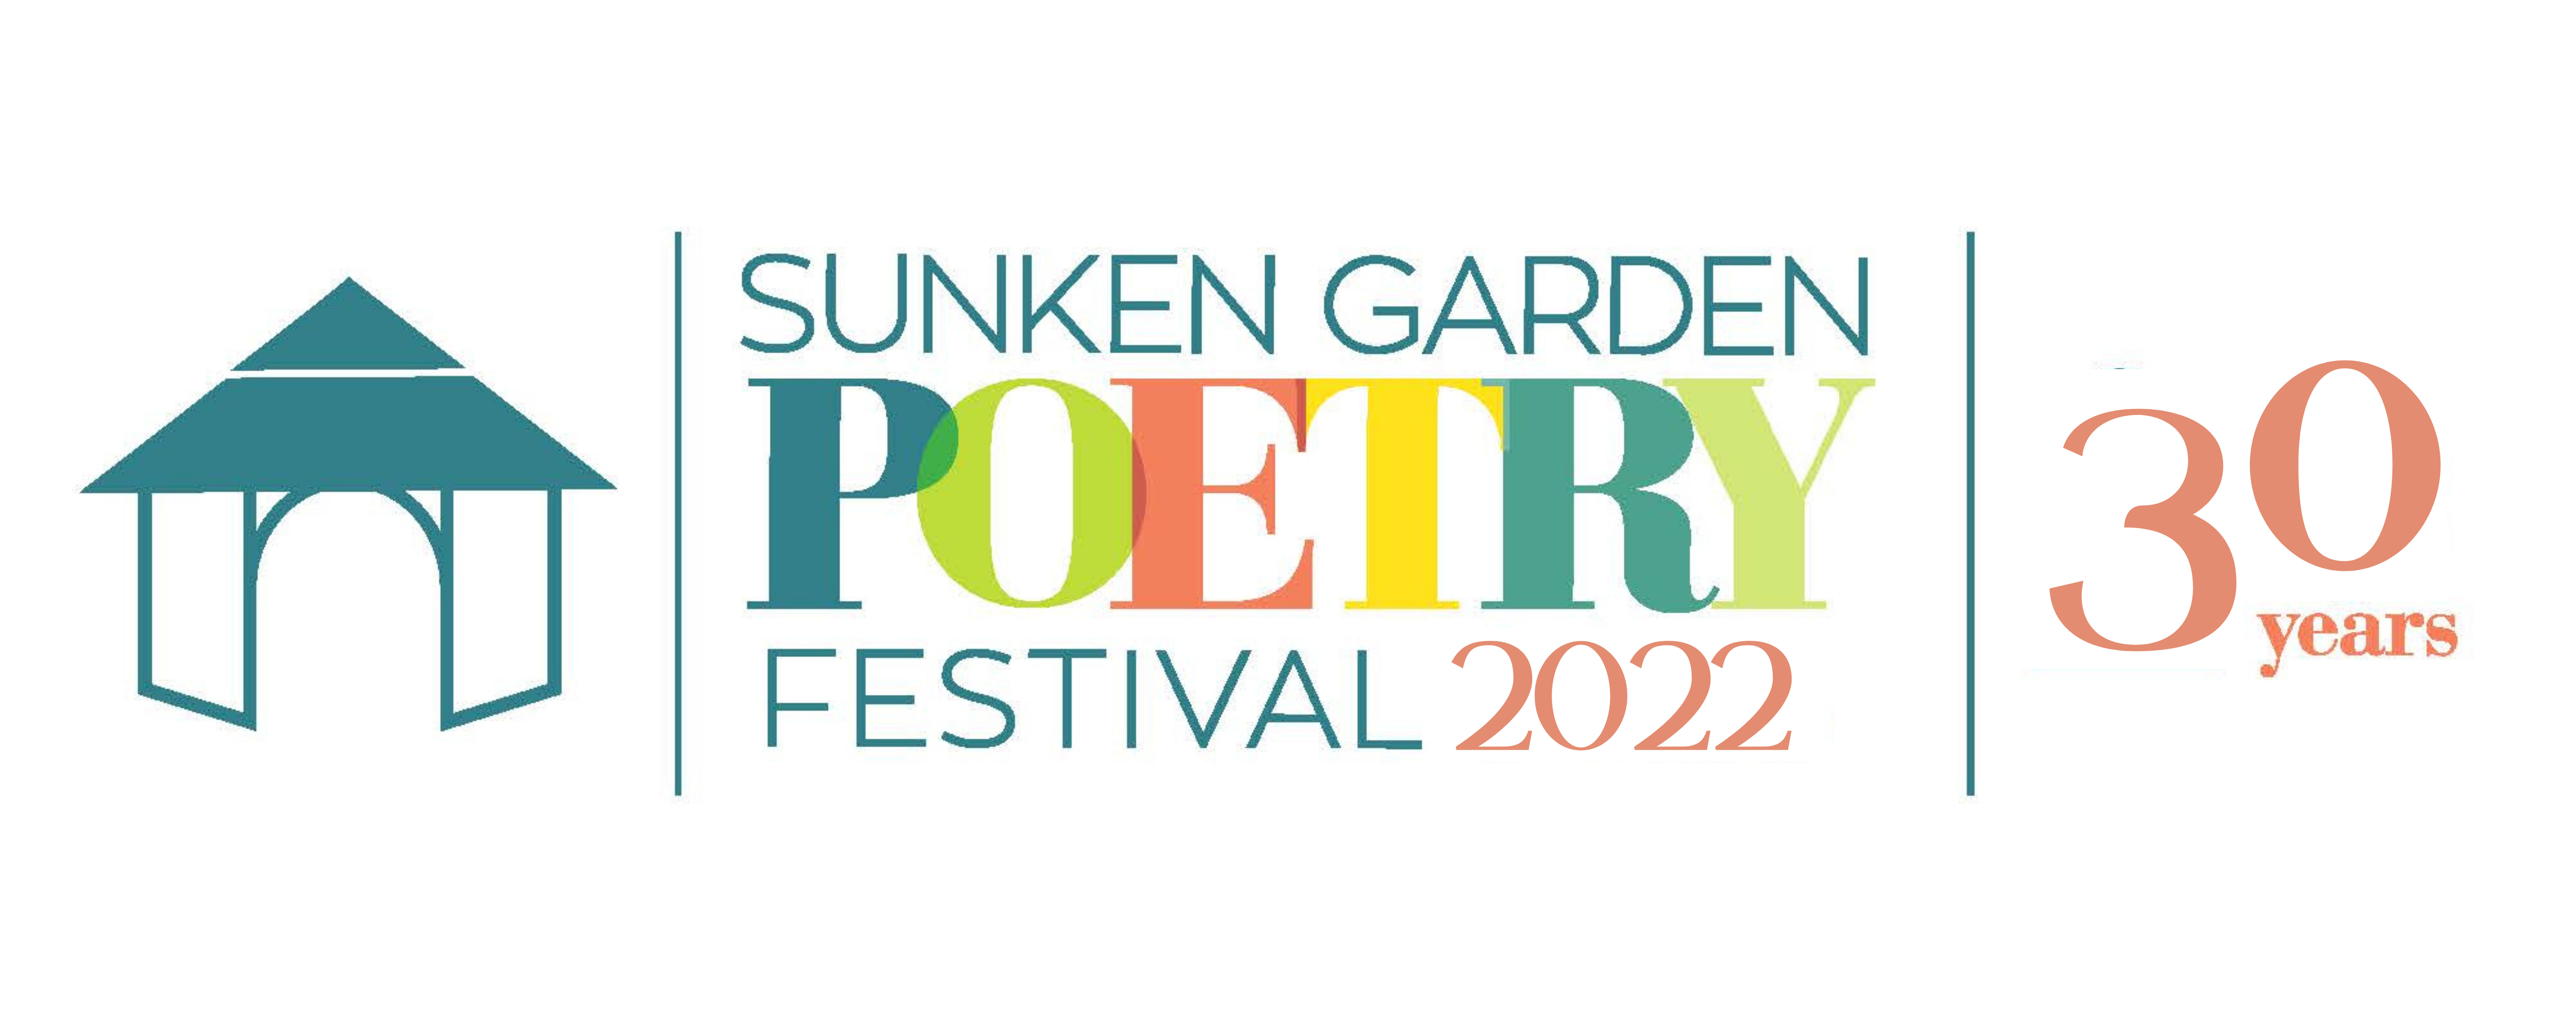 Sunken Garden Poetry Festival State of Poetry in CT Panel HillStead Museum